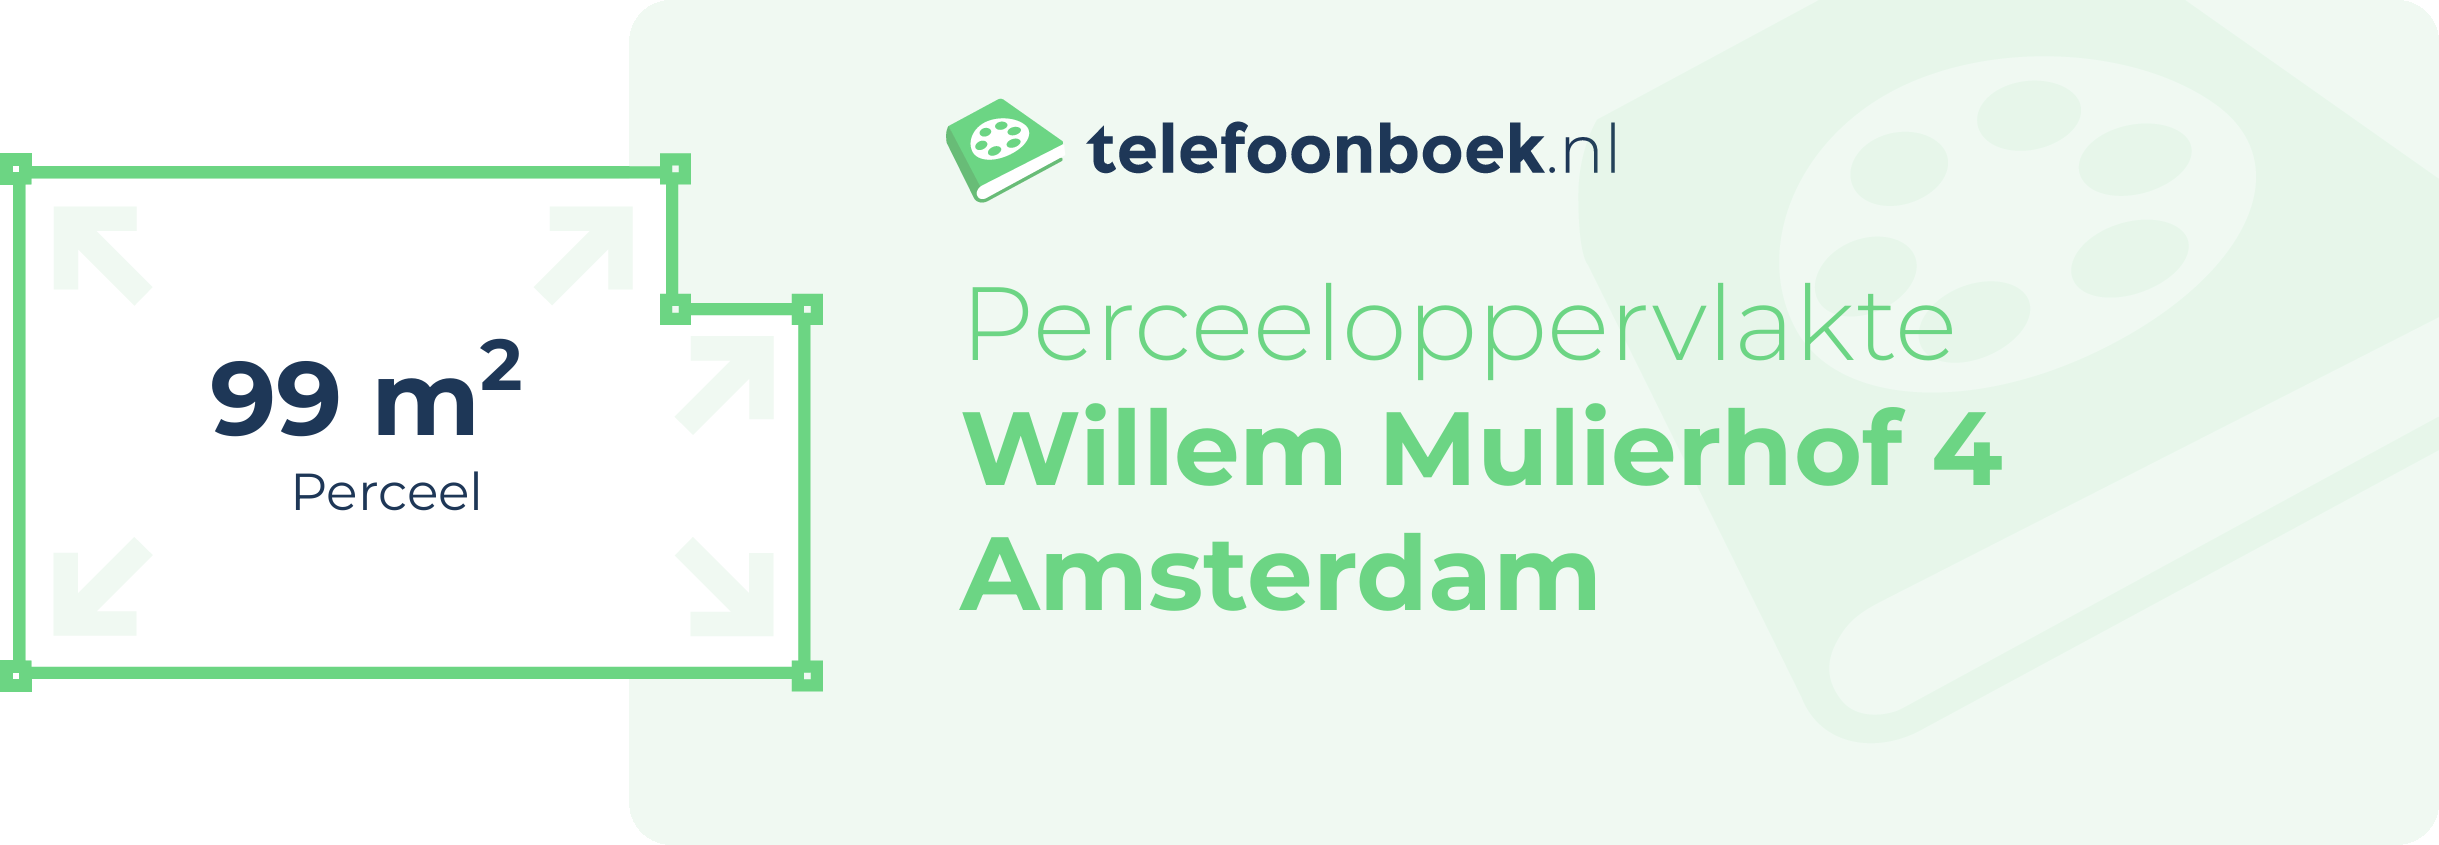 Perceeloppervlakte Willem Mulierhof 4 Amsterdam